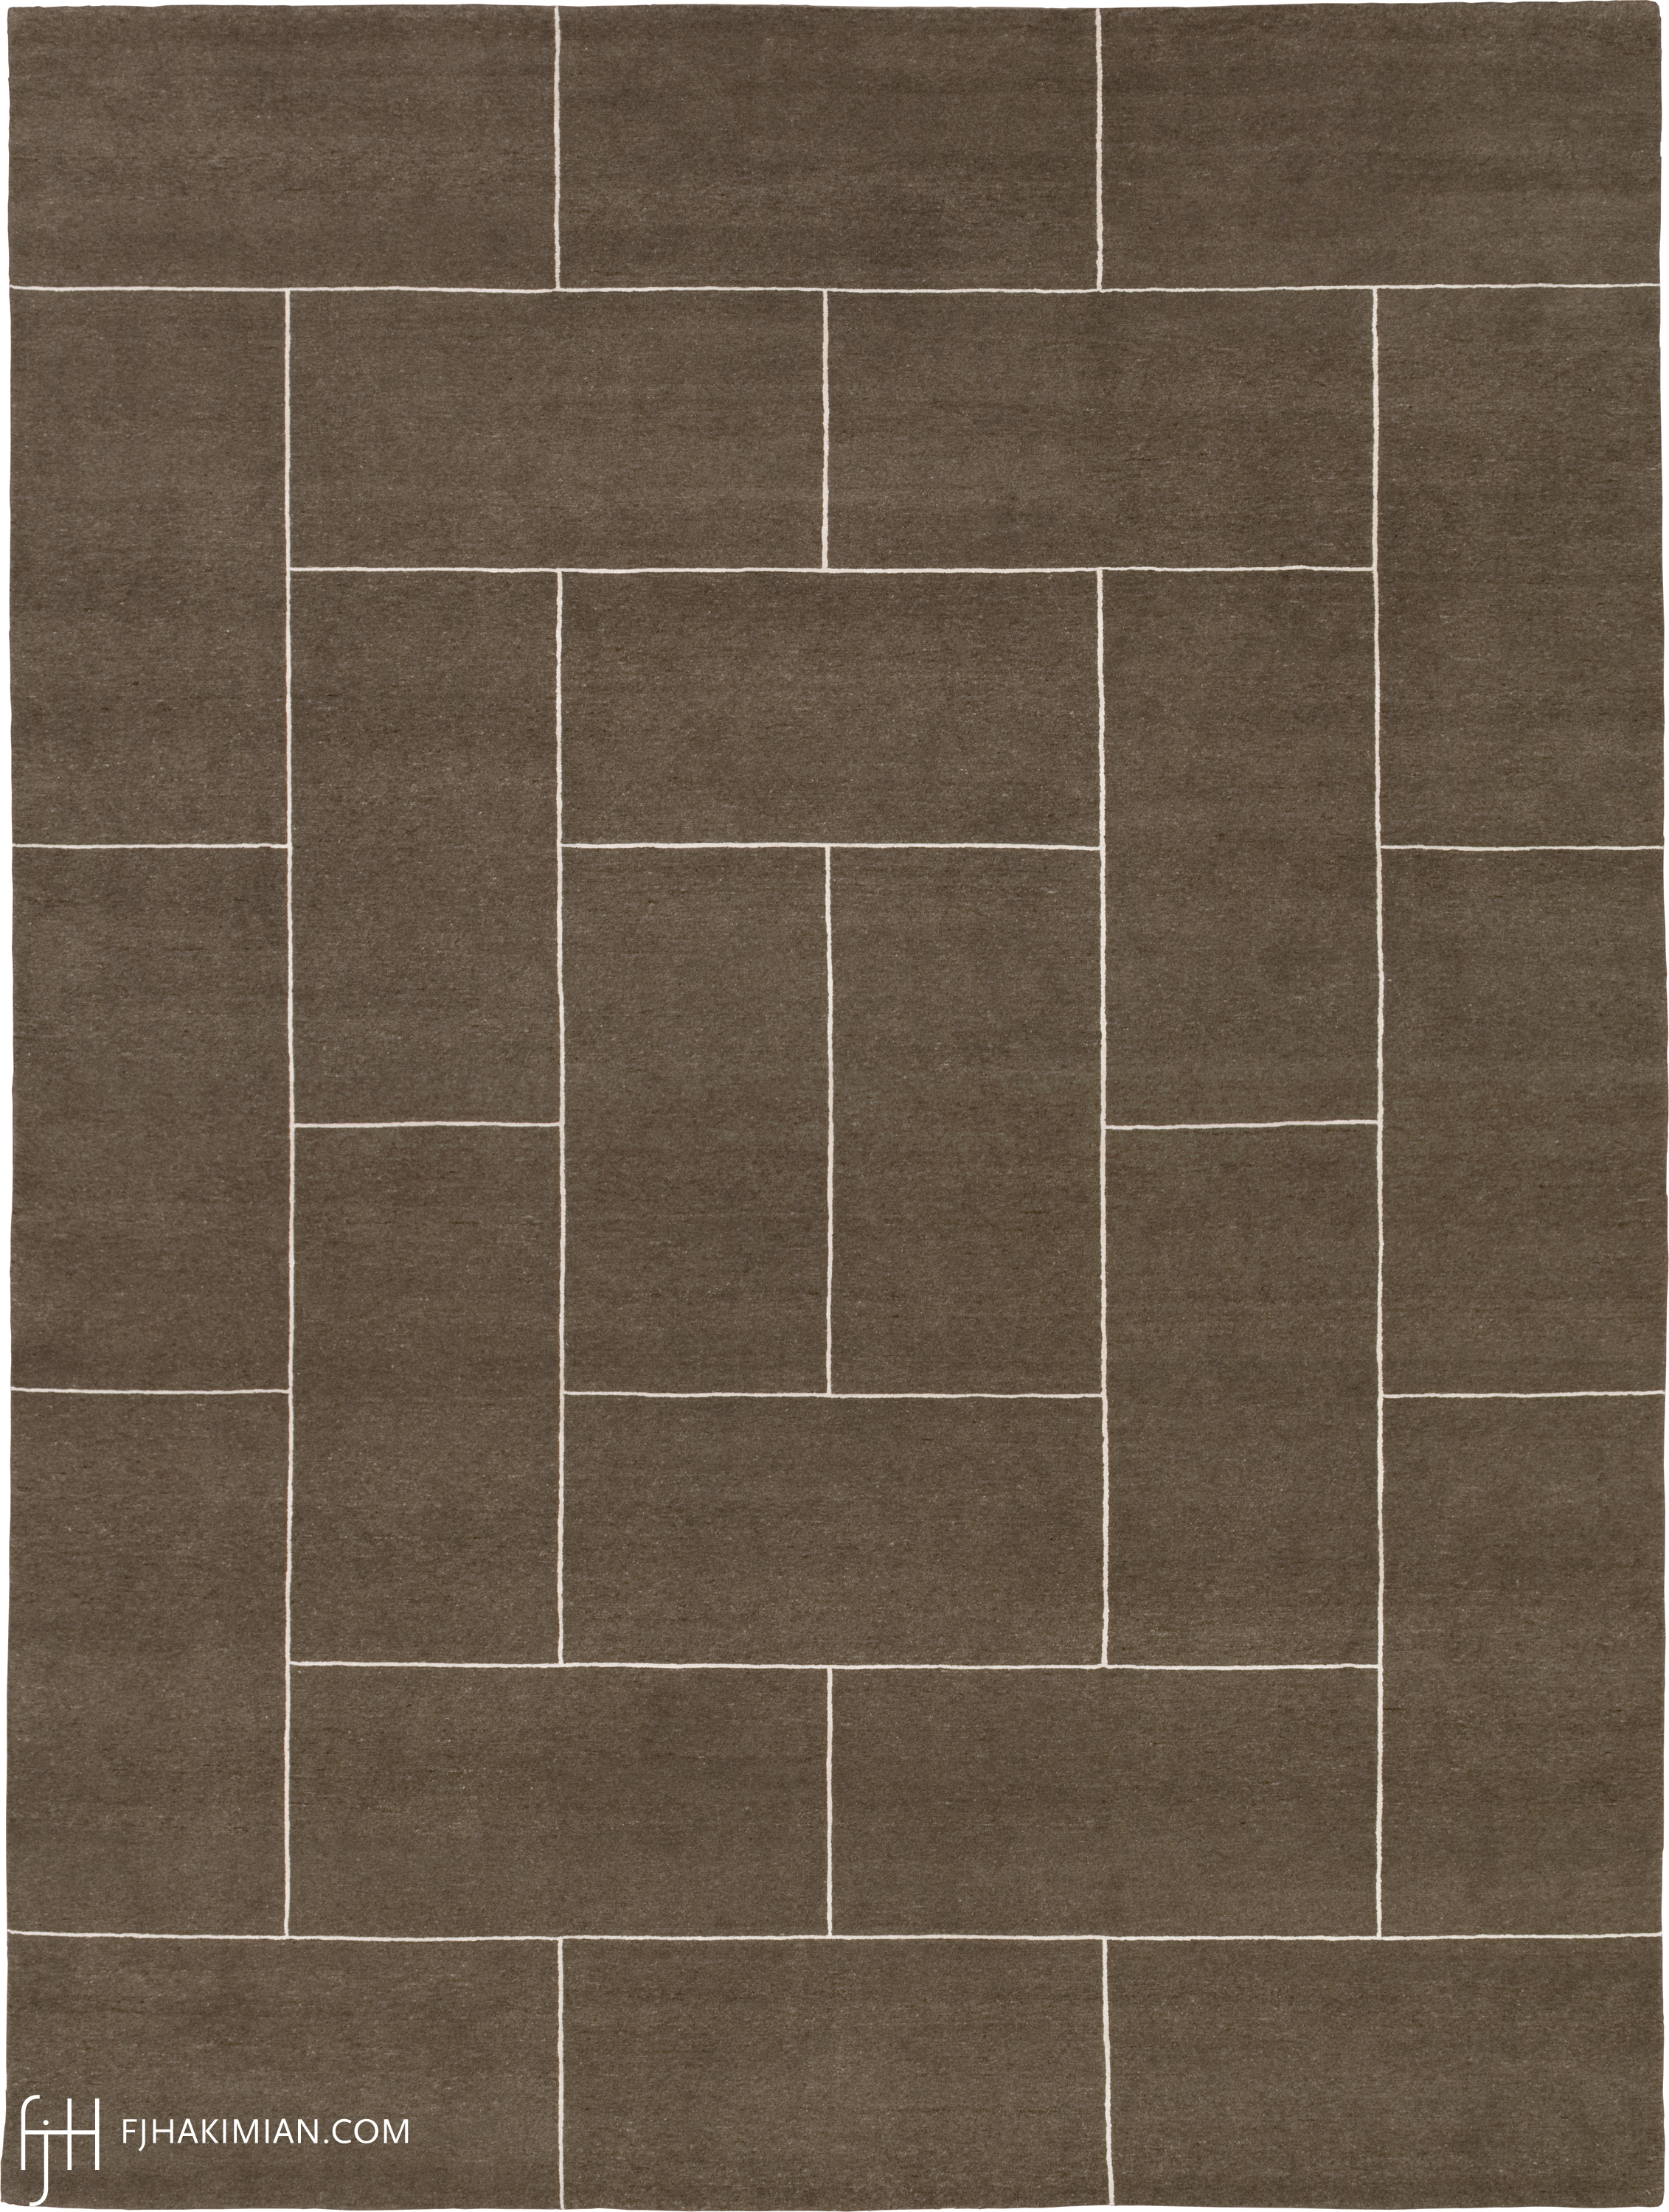 Tatami Design | Custom Modern & 20th Century Design Carpet | FJ Hakimian | Carpet Gallery in NYC